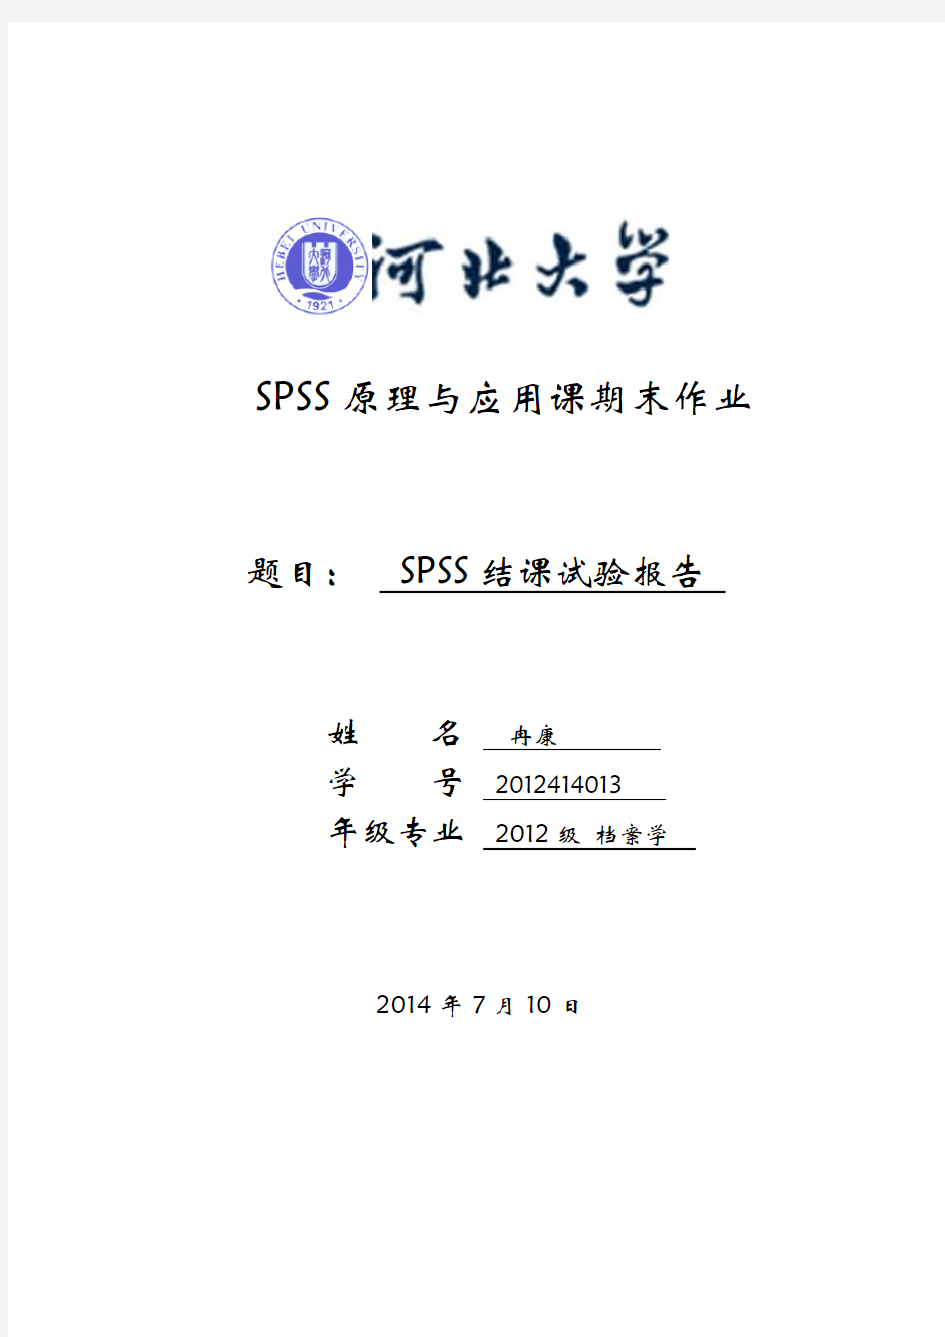 SPSS结课论文